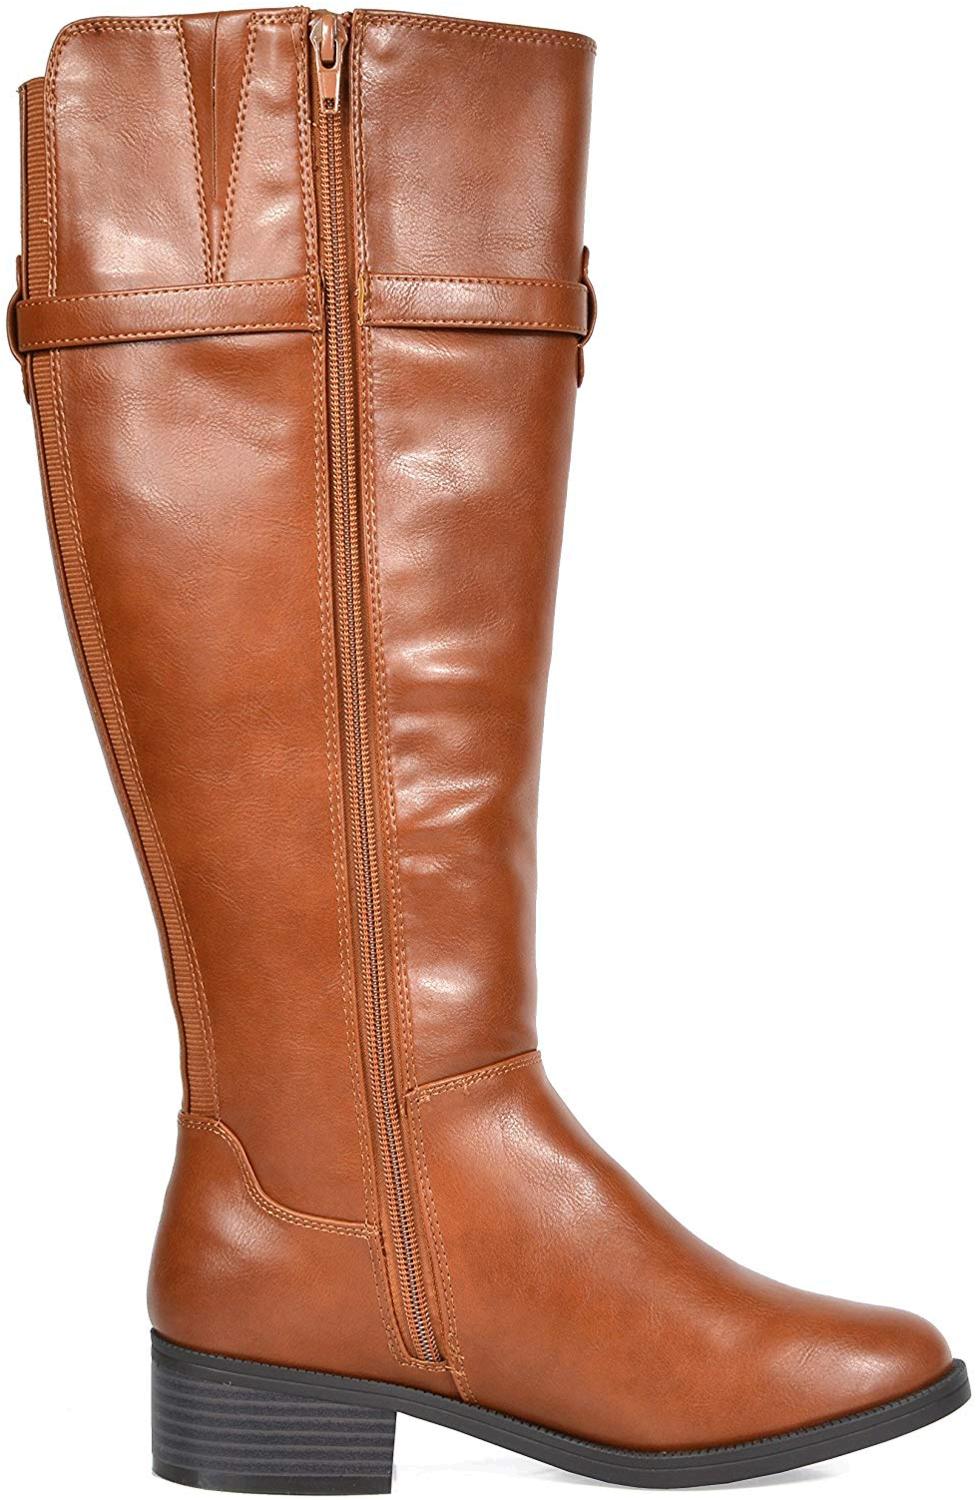 TOETOS Women's Knee High Riding Boots Wide Calf, Tan-hazel-w, Size 11.0 ...